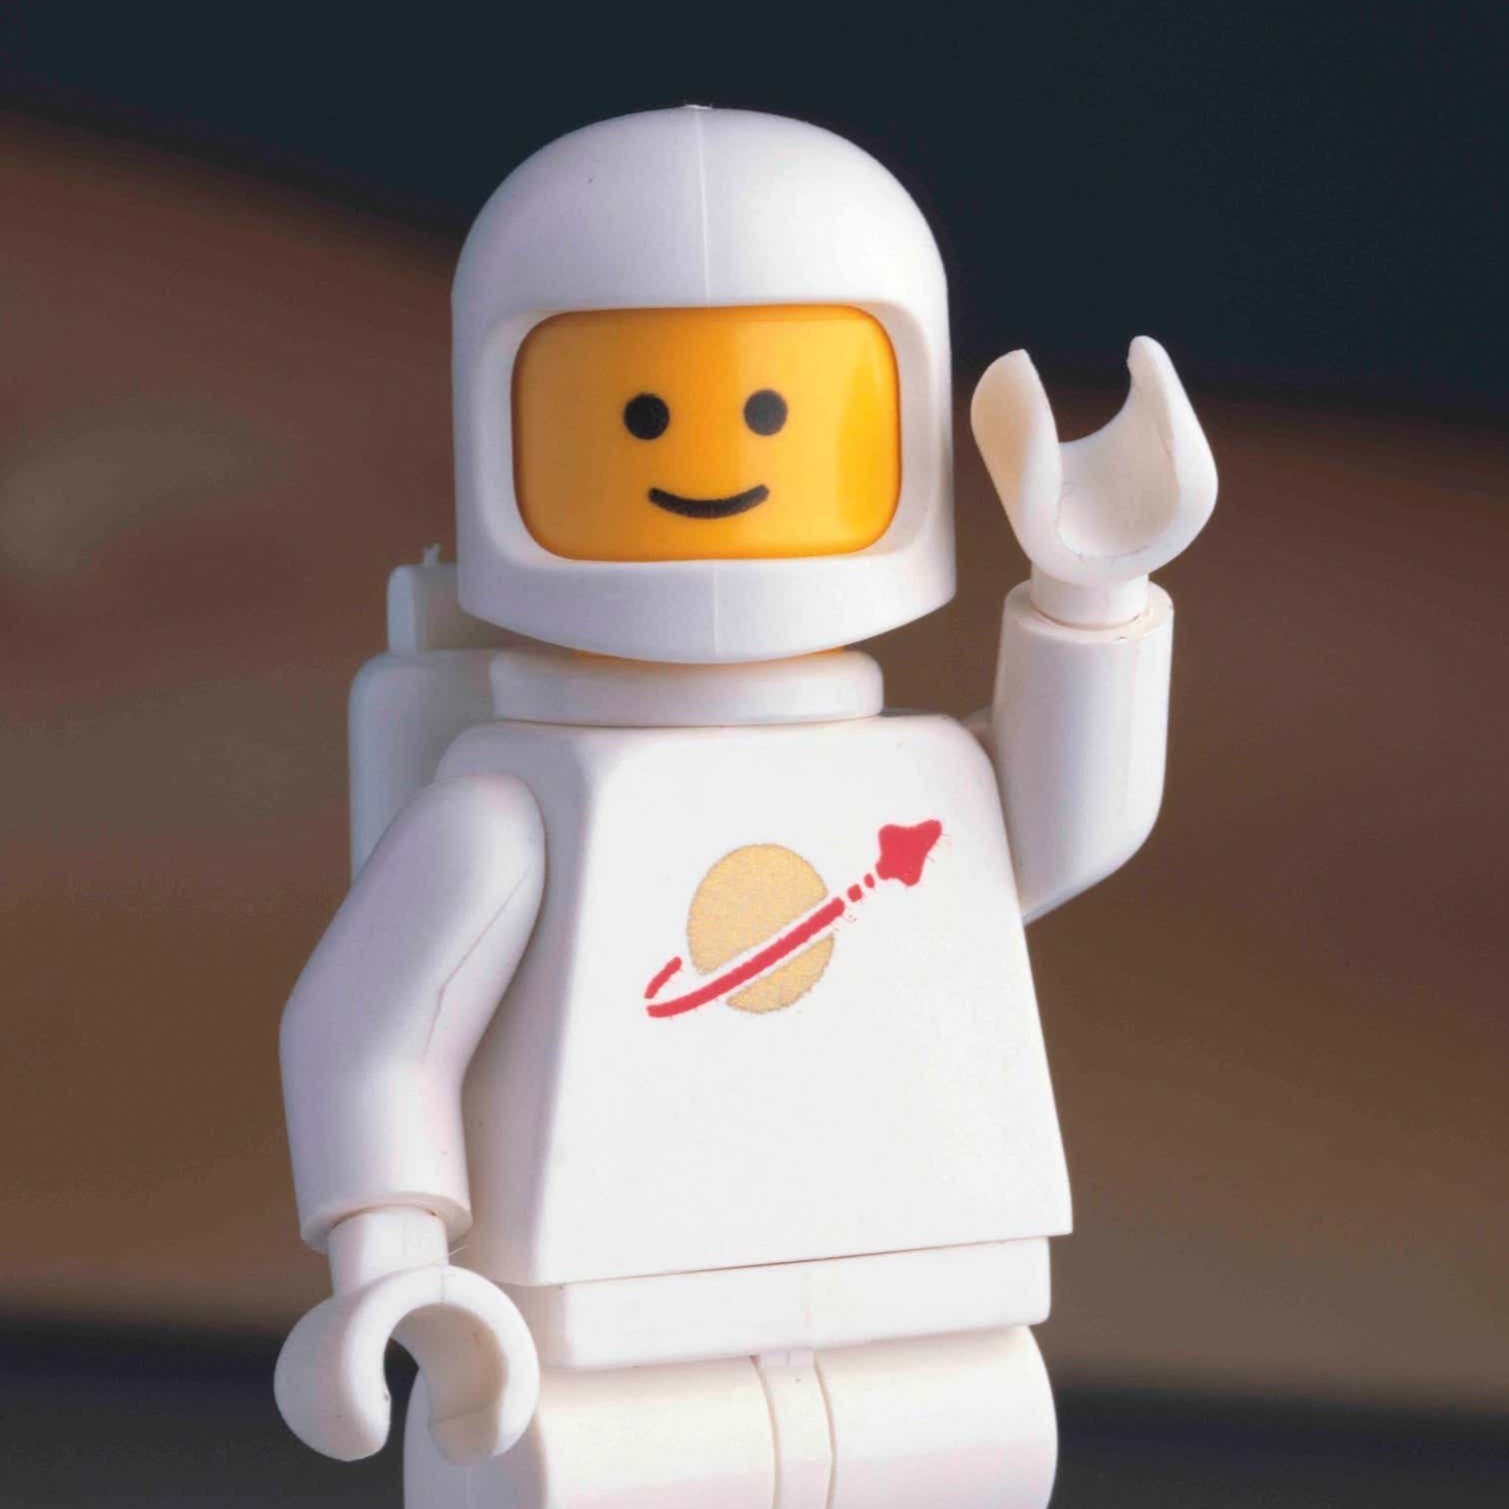 2. Original LEGO ® Space Figure, 1978 